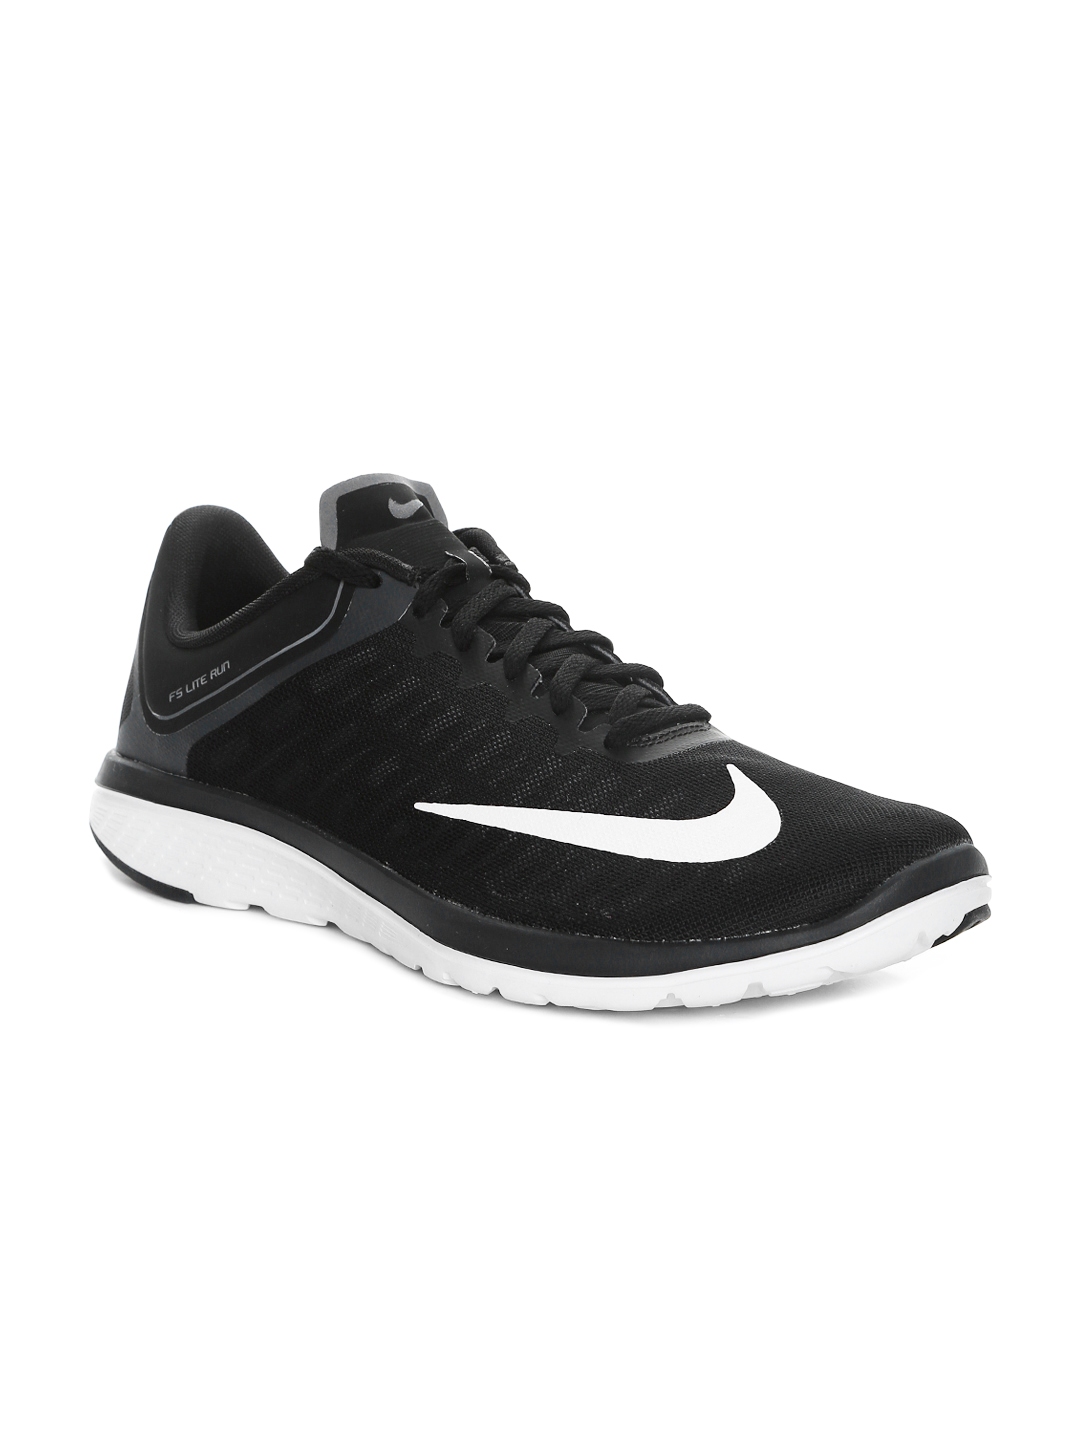 Buy Nike Men Black FS Lite Run 4 Running Shoes - Sports Shoes for Men ...